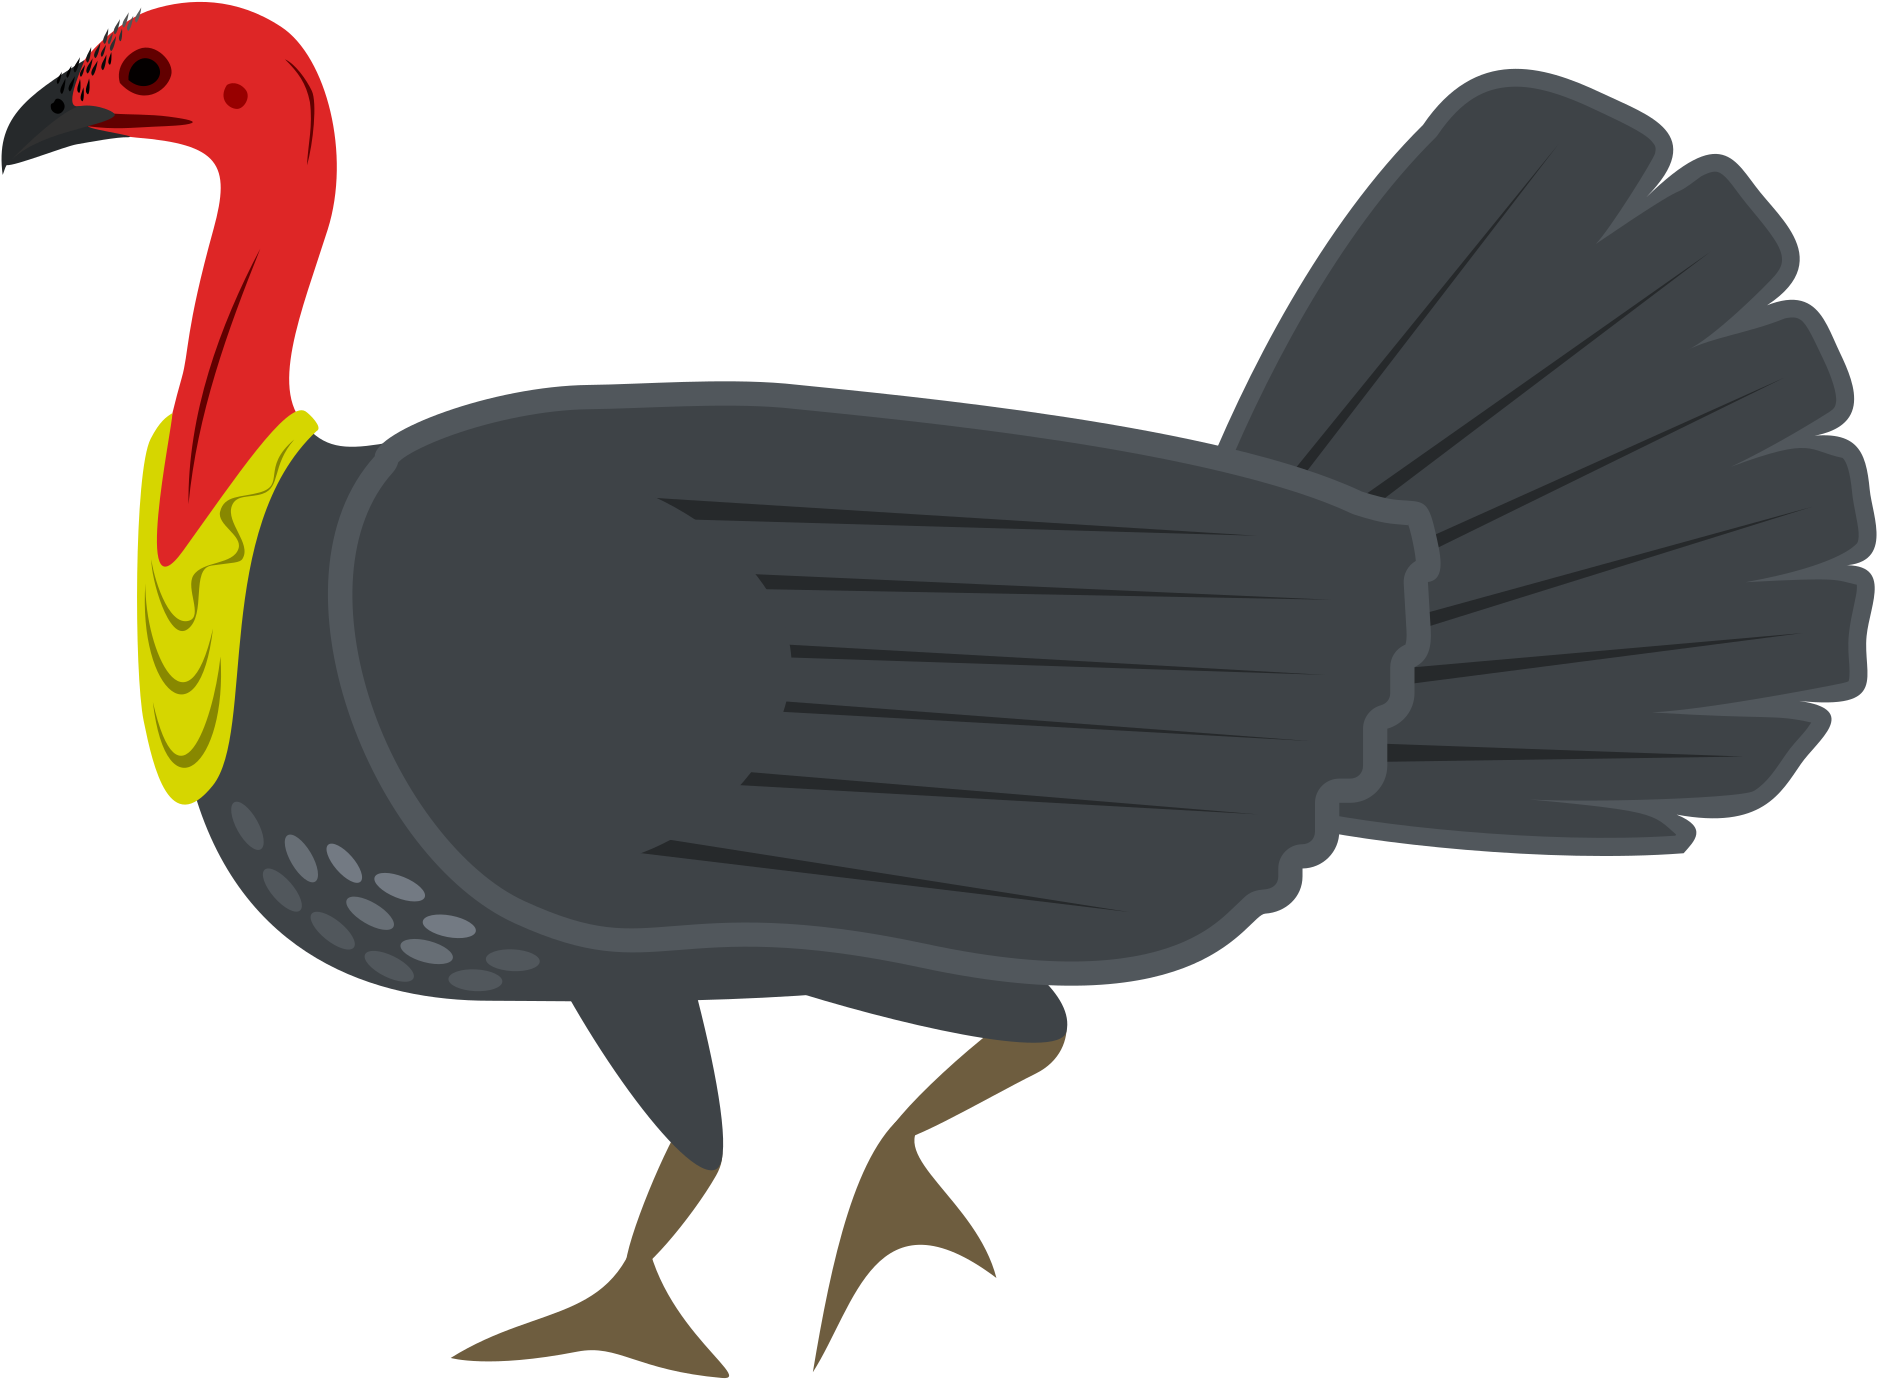 Brush-turkey - Bush Turkey Clipart (2400x2400)